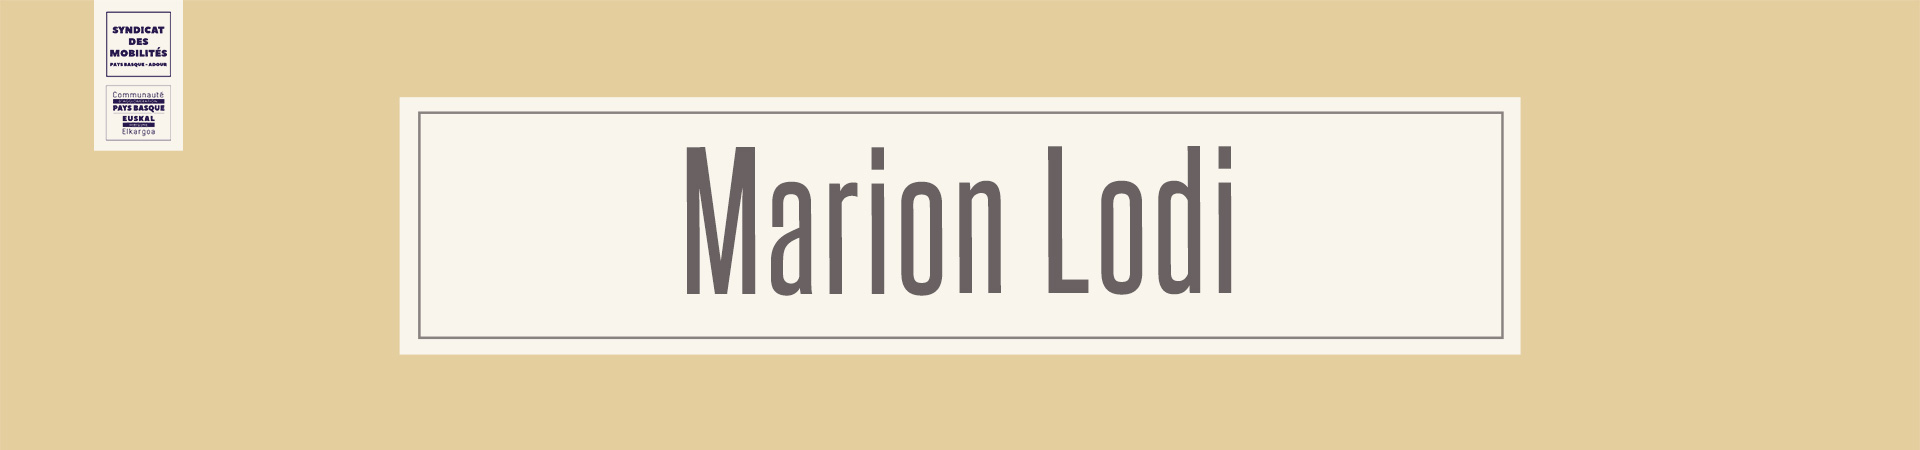 Marion Lodi